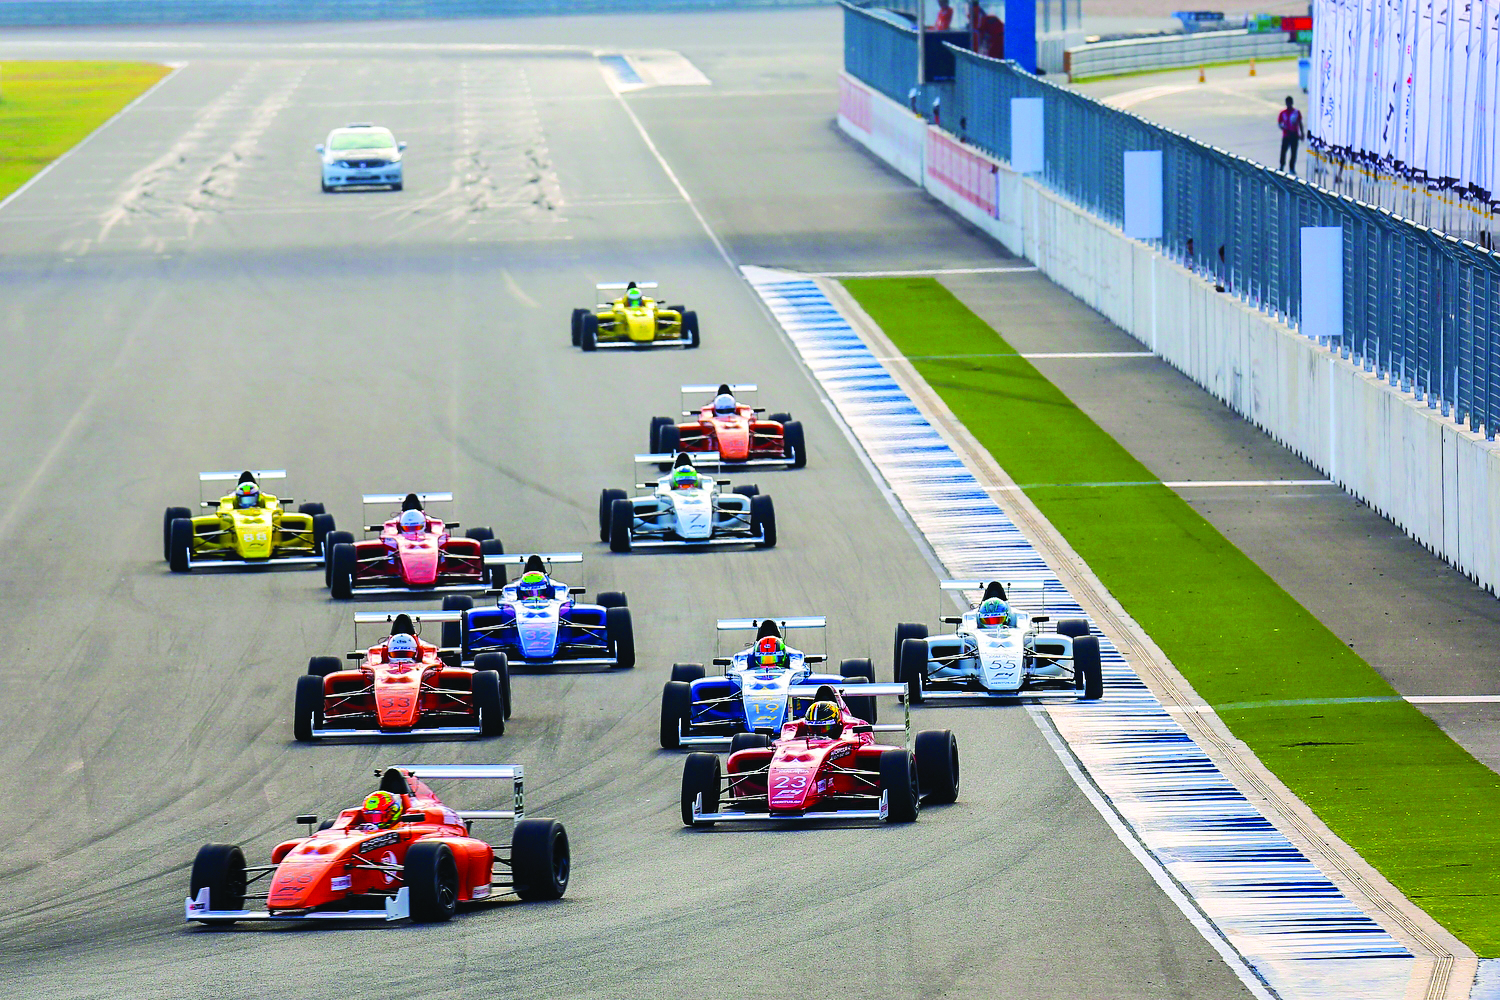 Motorsports: Unfortunate final F4 race for Oman's Khalid Al Wahaibi in Thailand